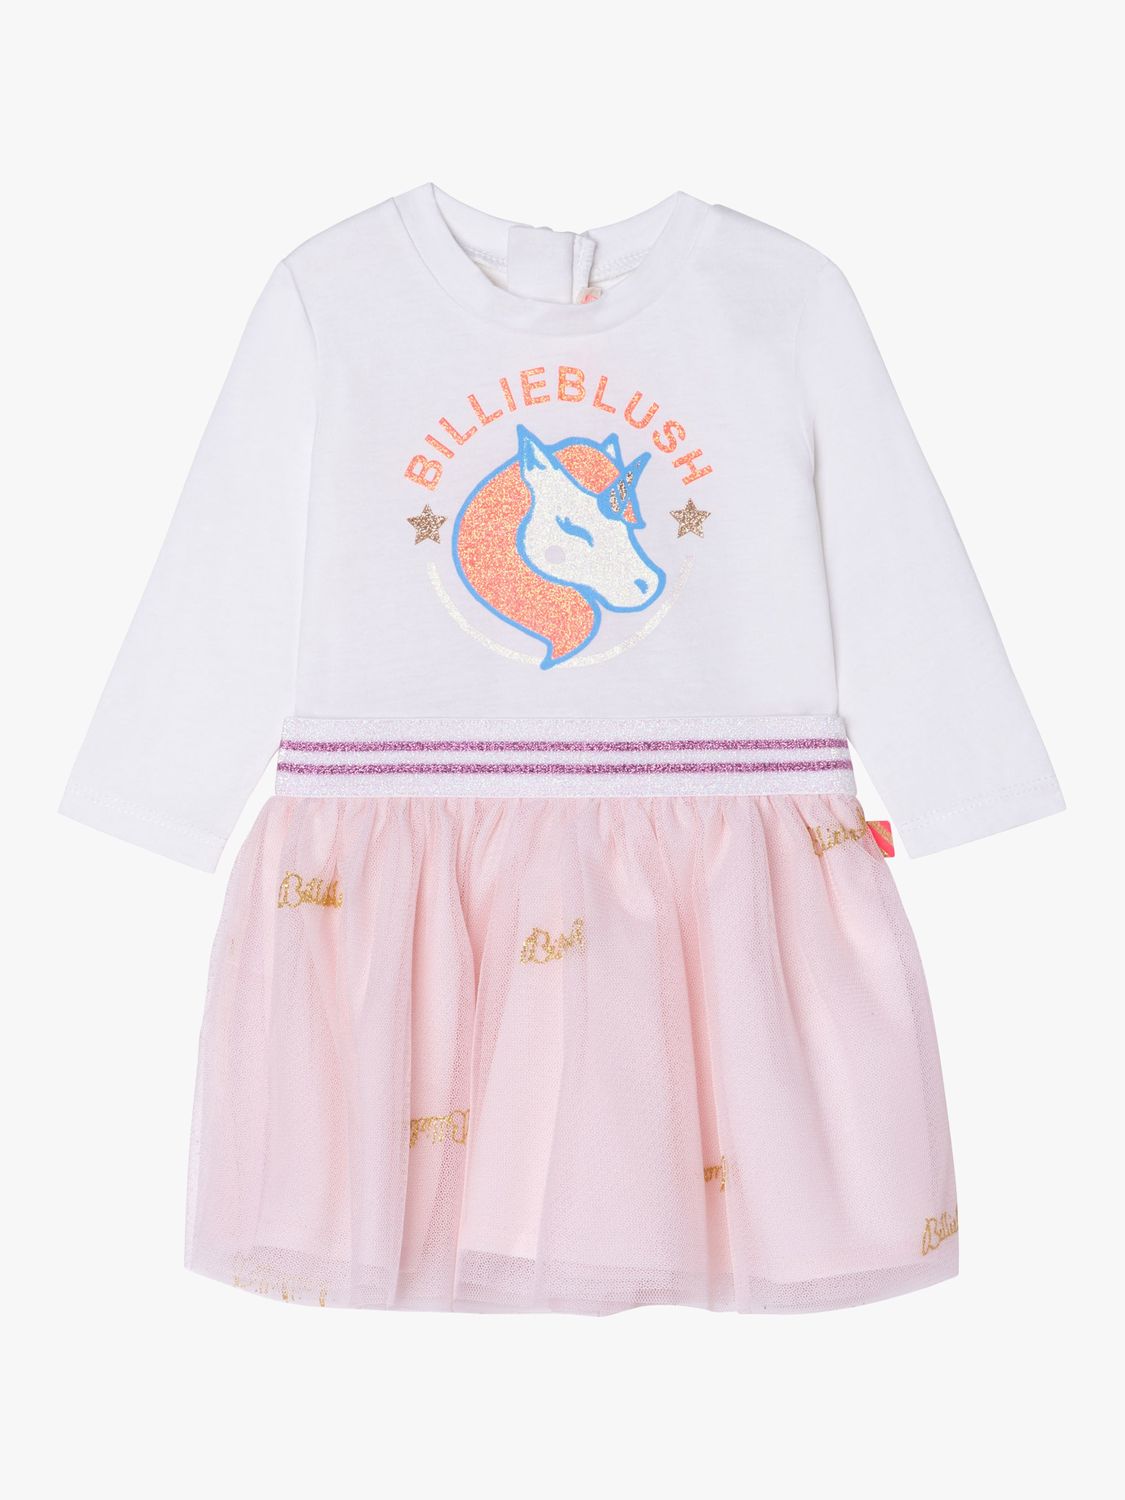 Billieblush Baby Unicorn Logo Dress, Ivory/Pink, 3 months